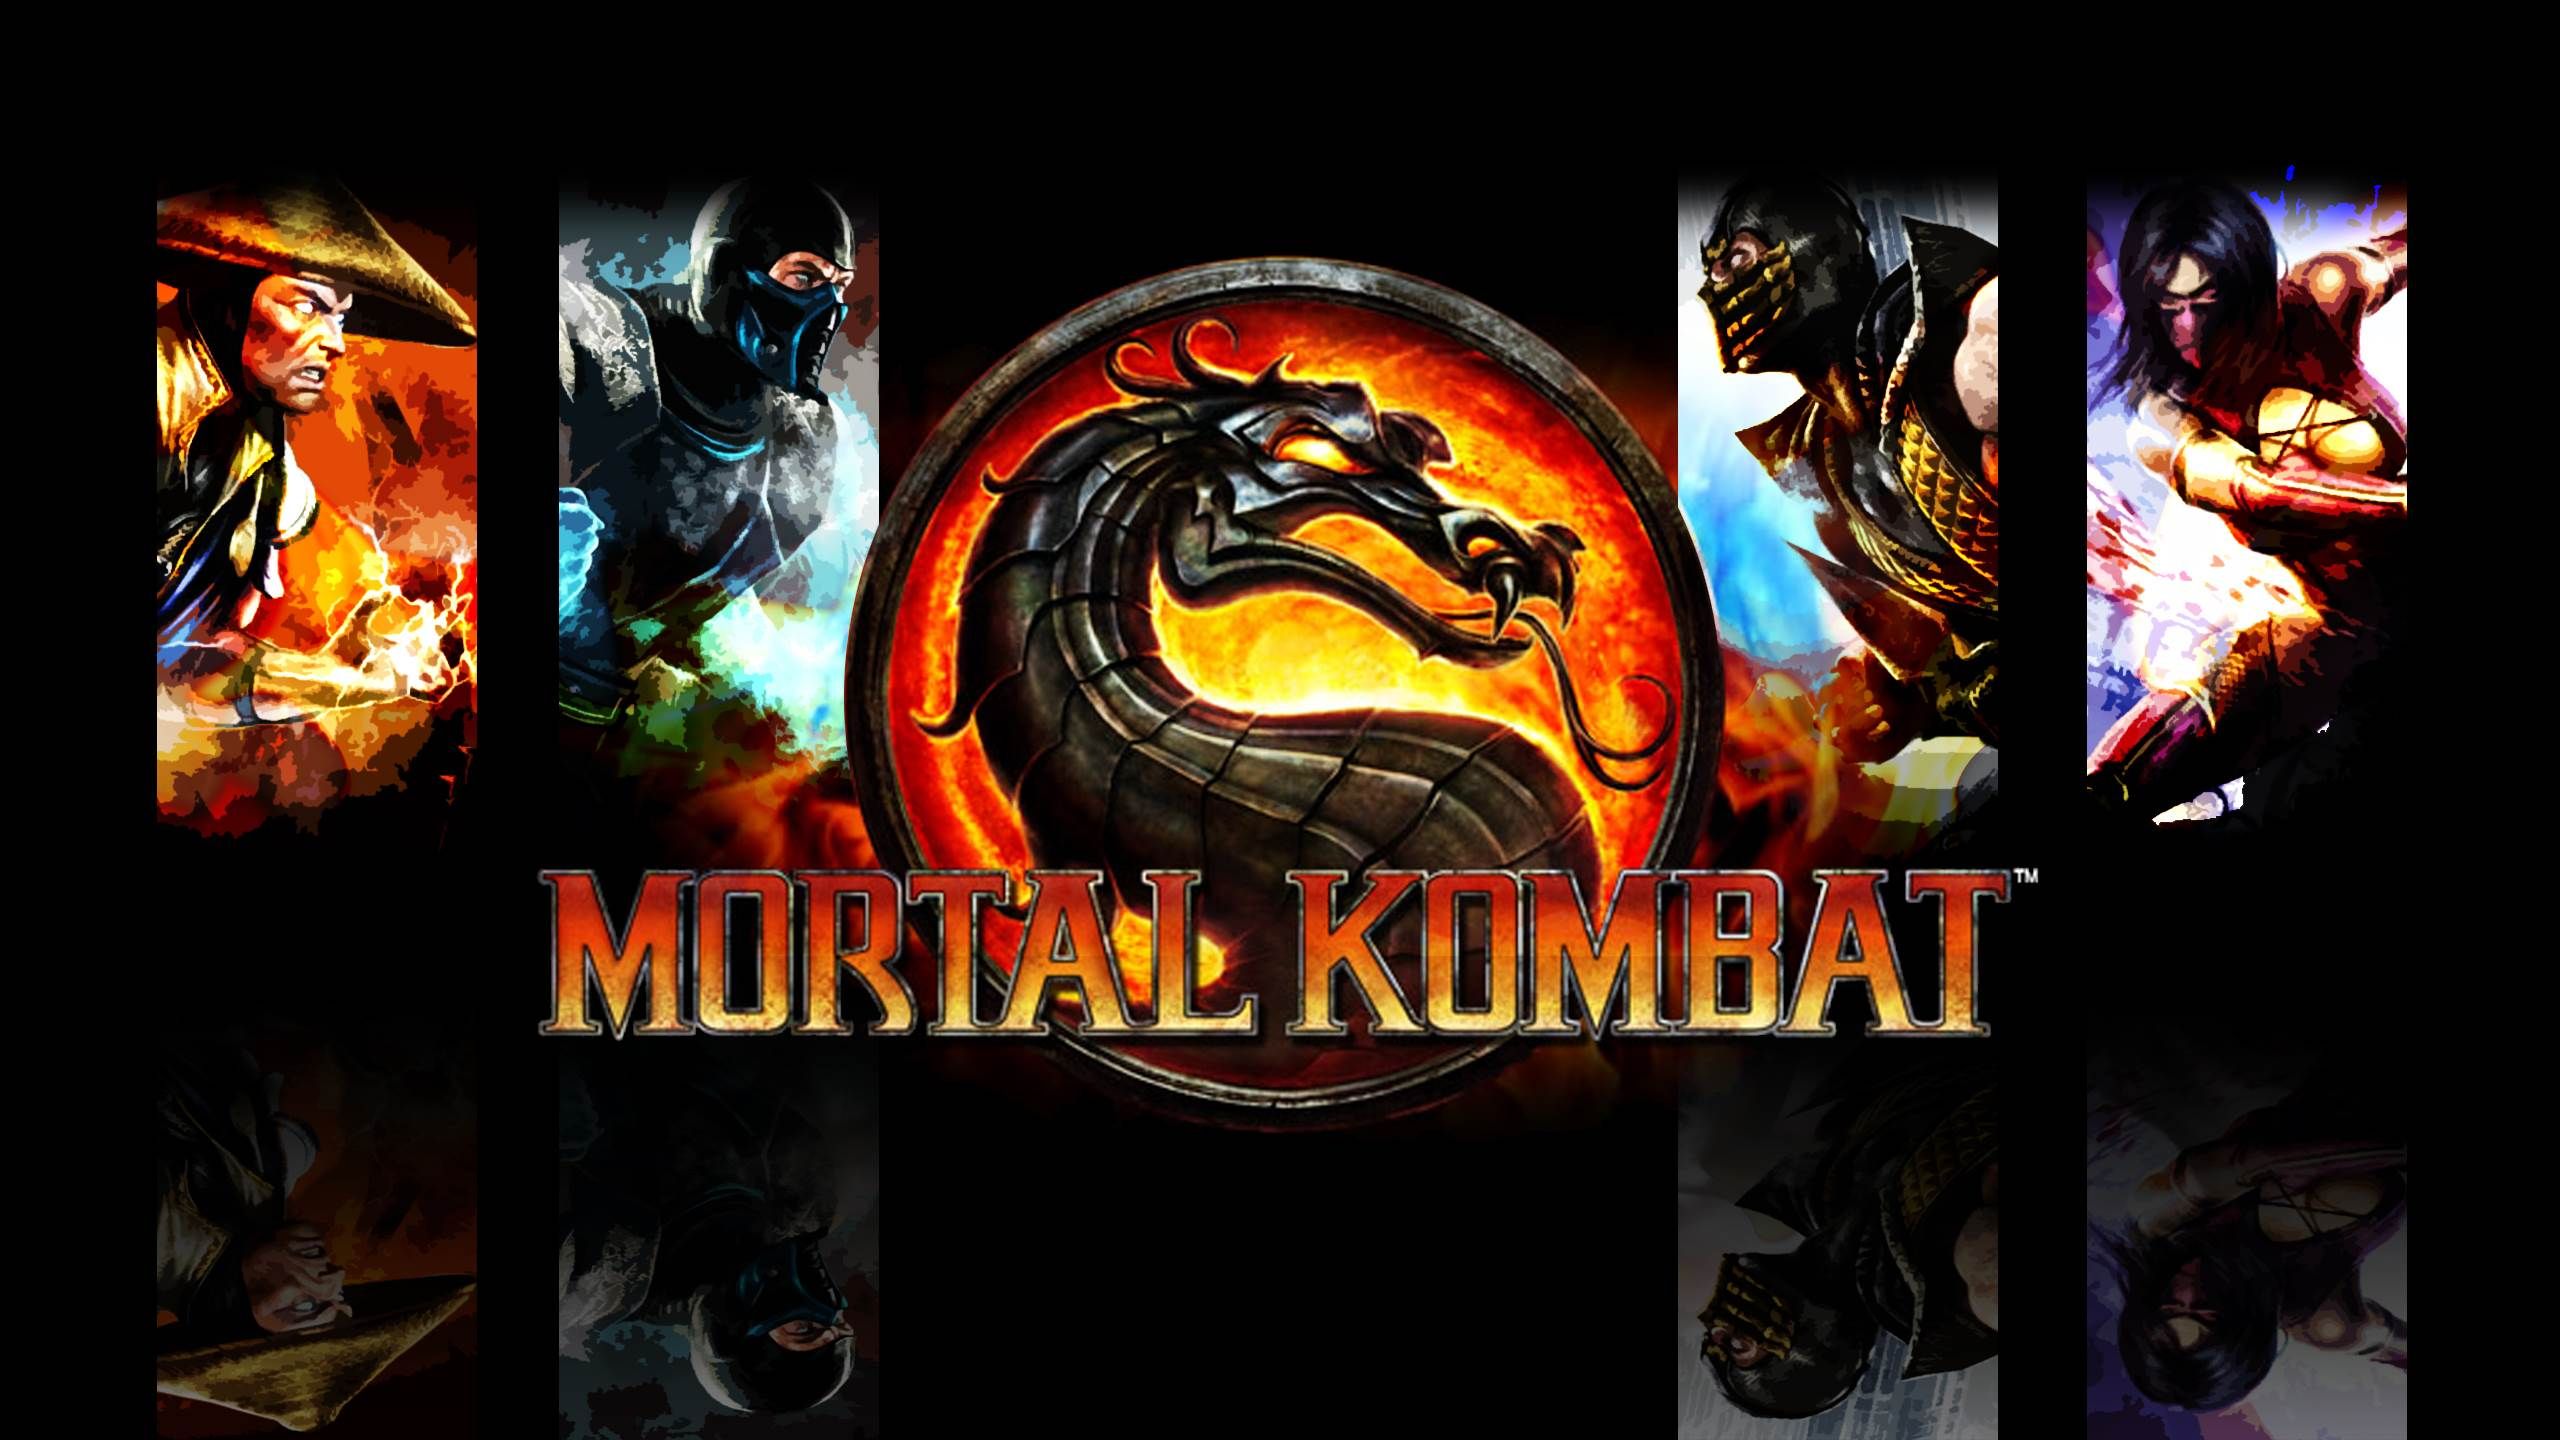 undefined Imagenes De Mortal Kombat 9. Adorable Wallpaper. Mortal kombat Mortal kombat, Mortal kombat komplete edition